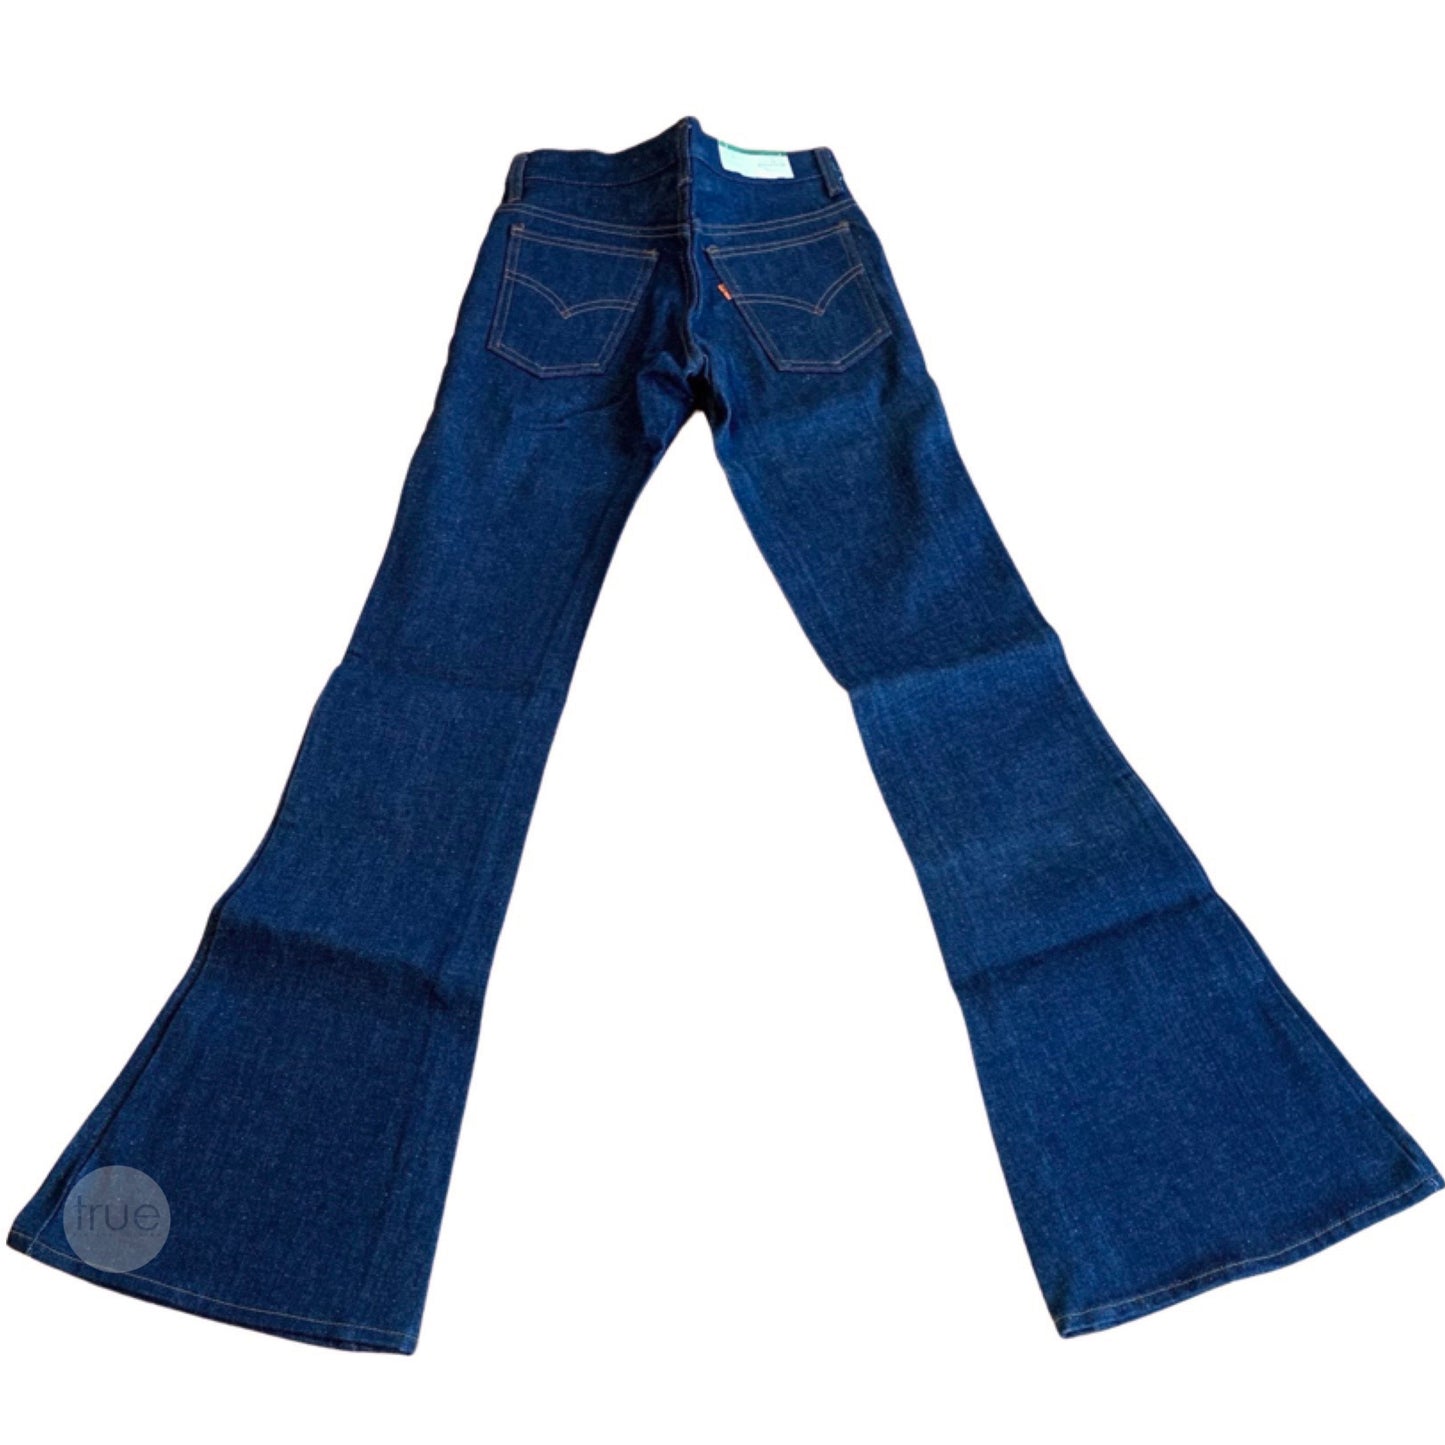 vintage 1970's jeans ...DEADSTOCK never worn Levi's orange tab bell bottom jeans 26/33